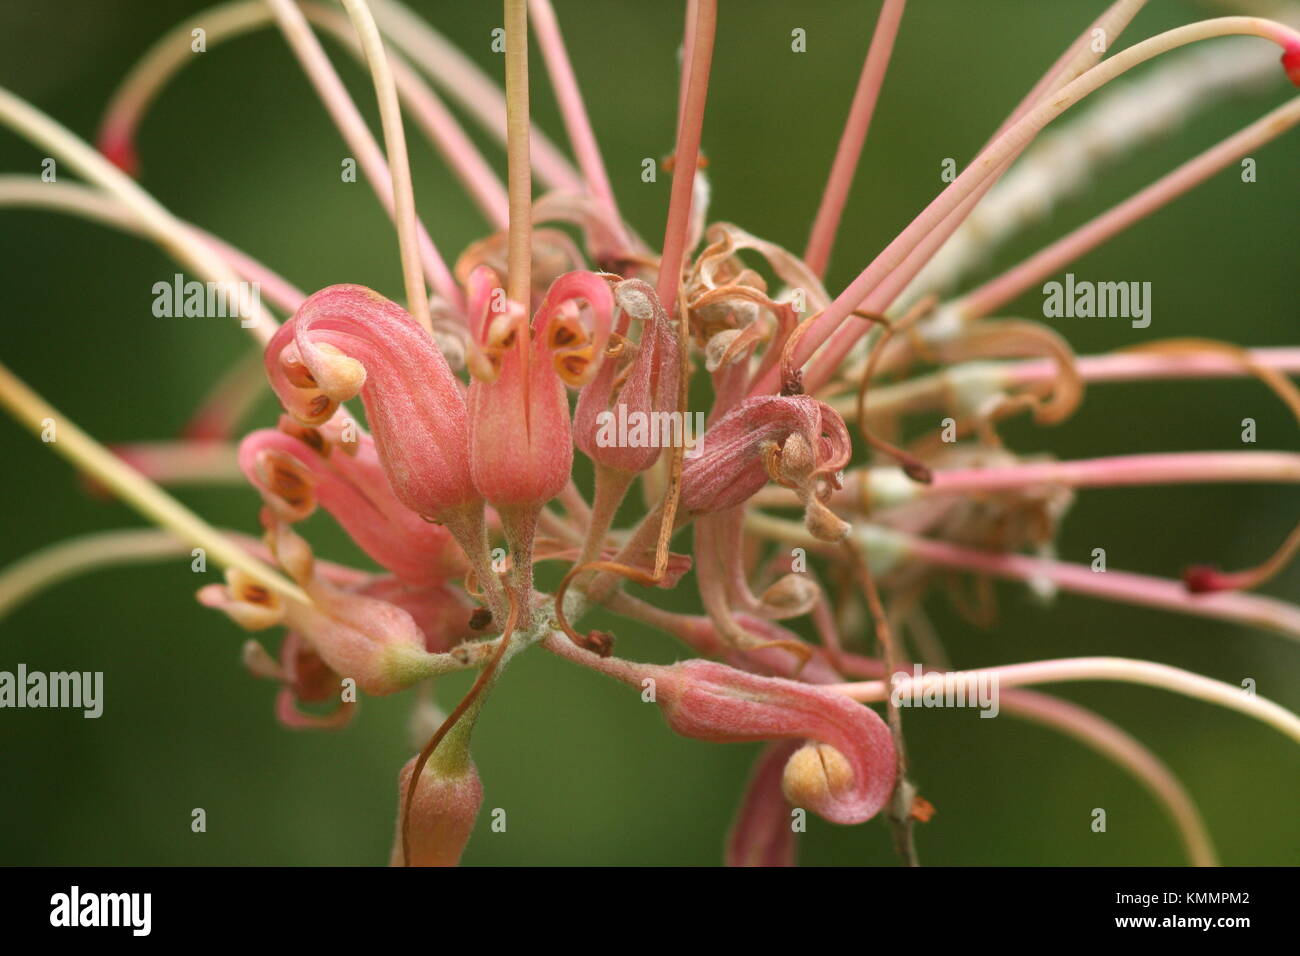 Grevillea flower close-up Stock Photo